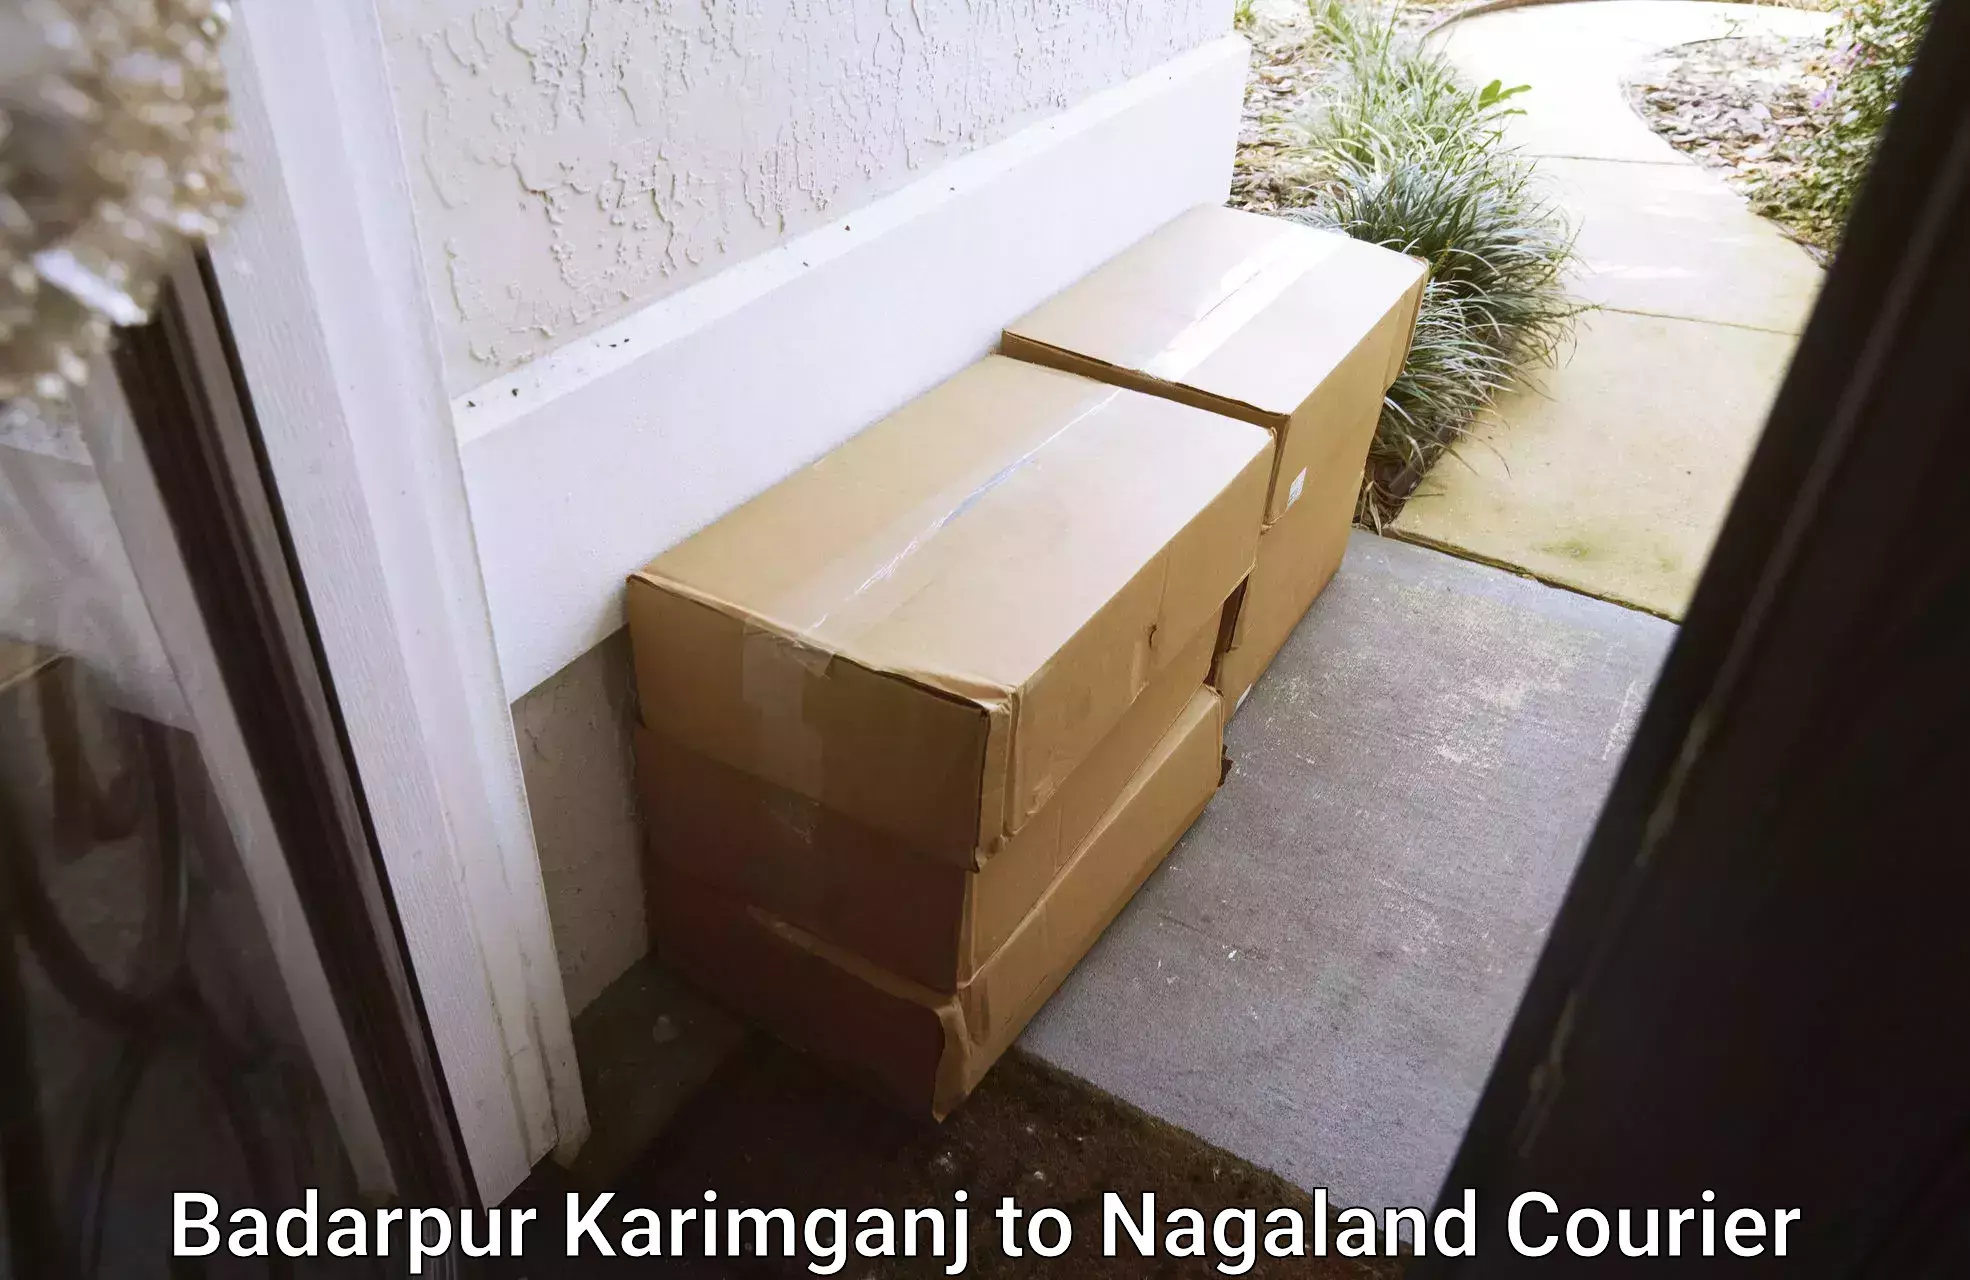 Lightweight parcel options Badarpur Karimganj to Mon